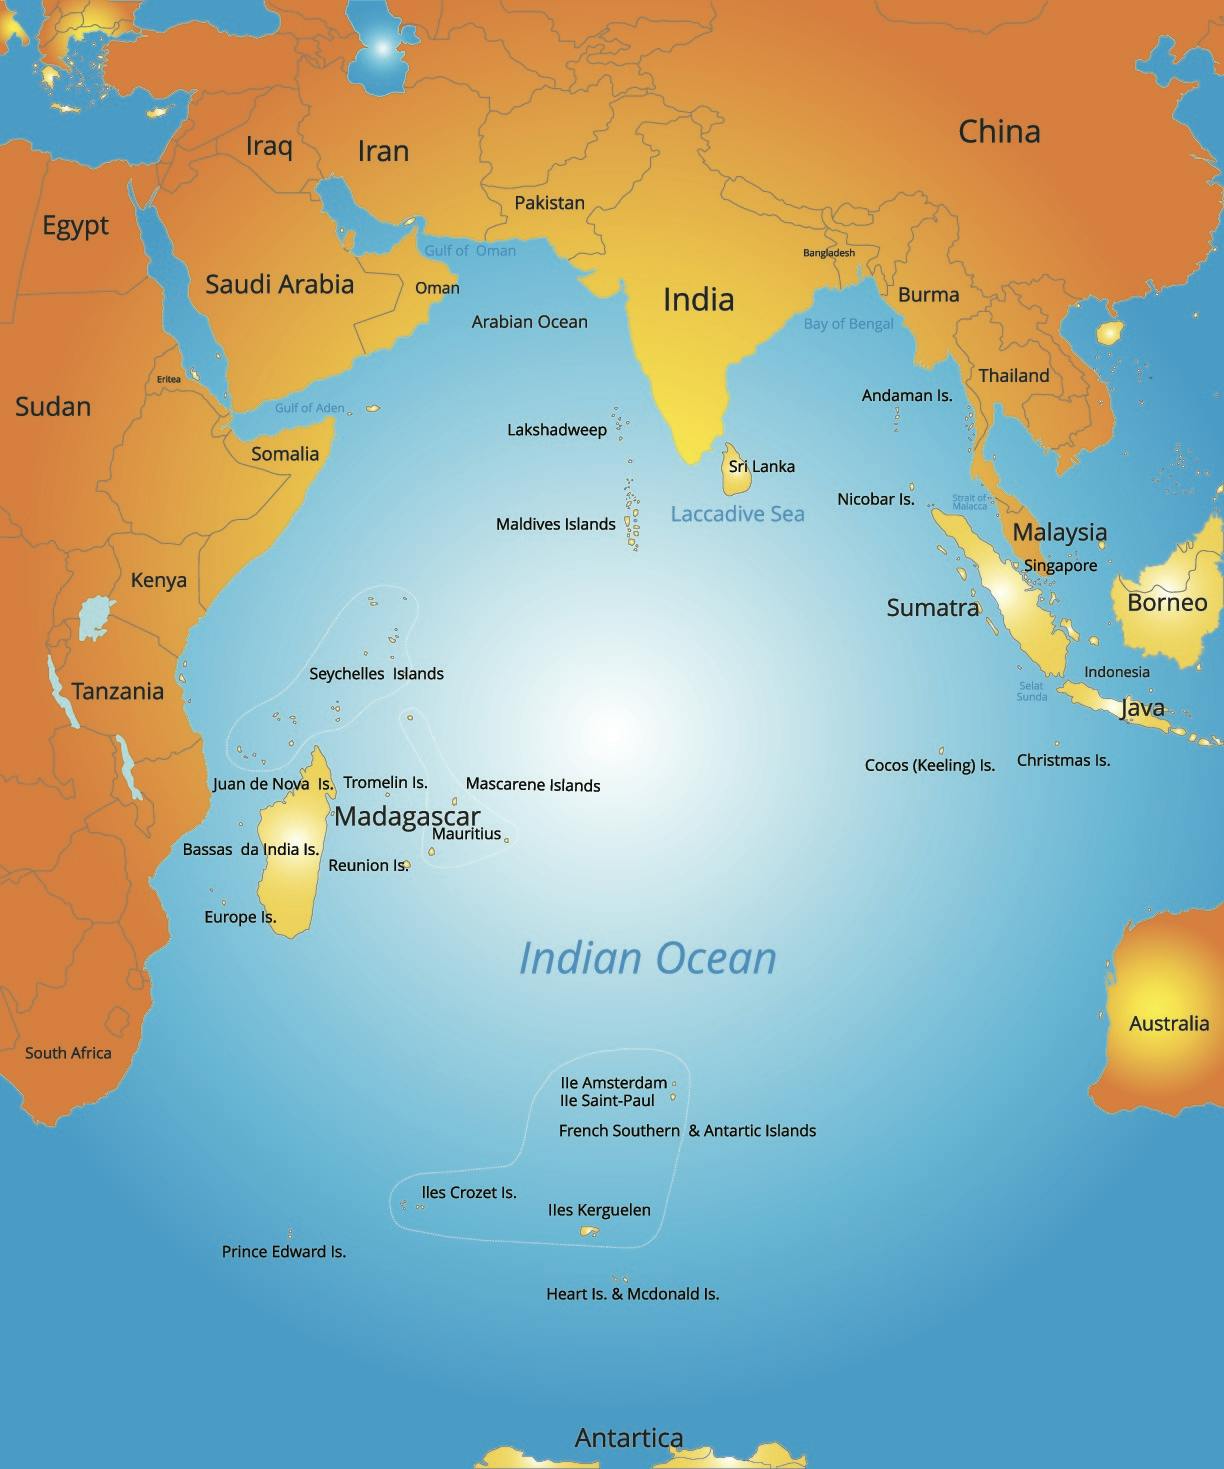 Océano Índico